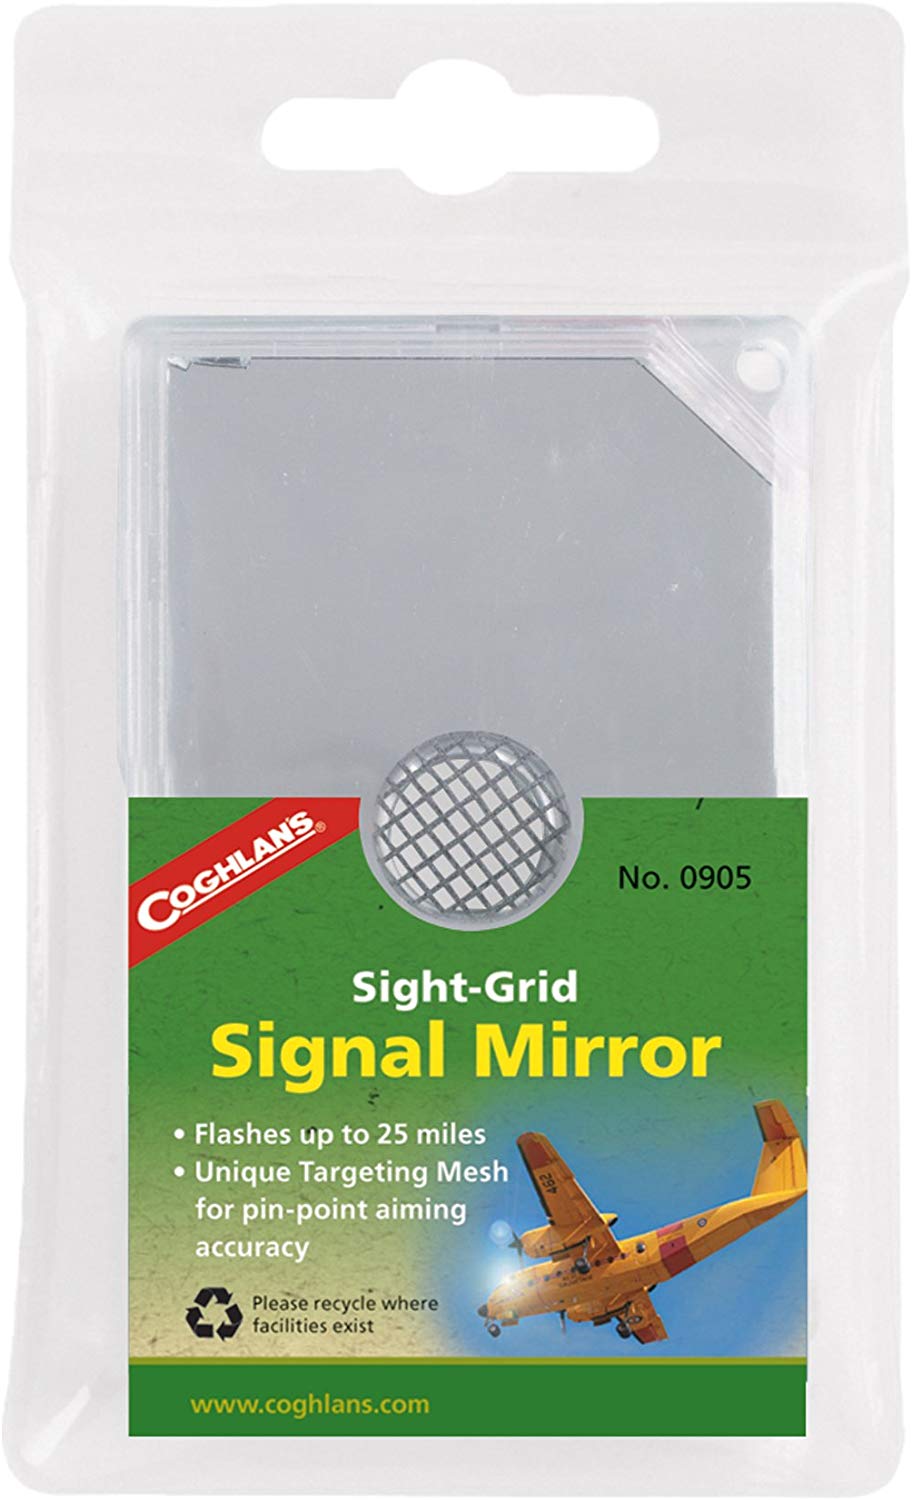 Coghlan's Sight-Grid Signal Mirror